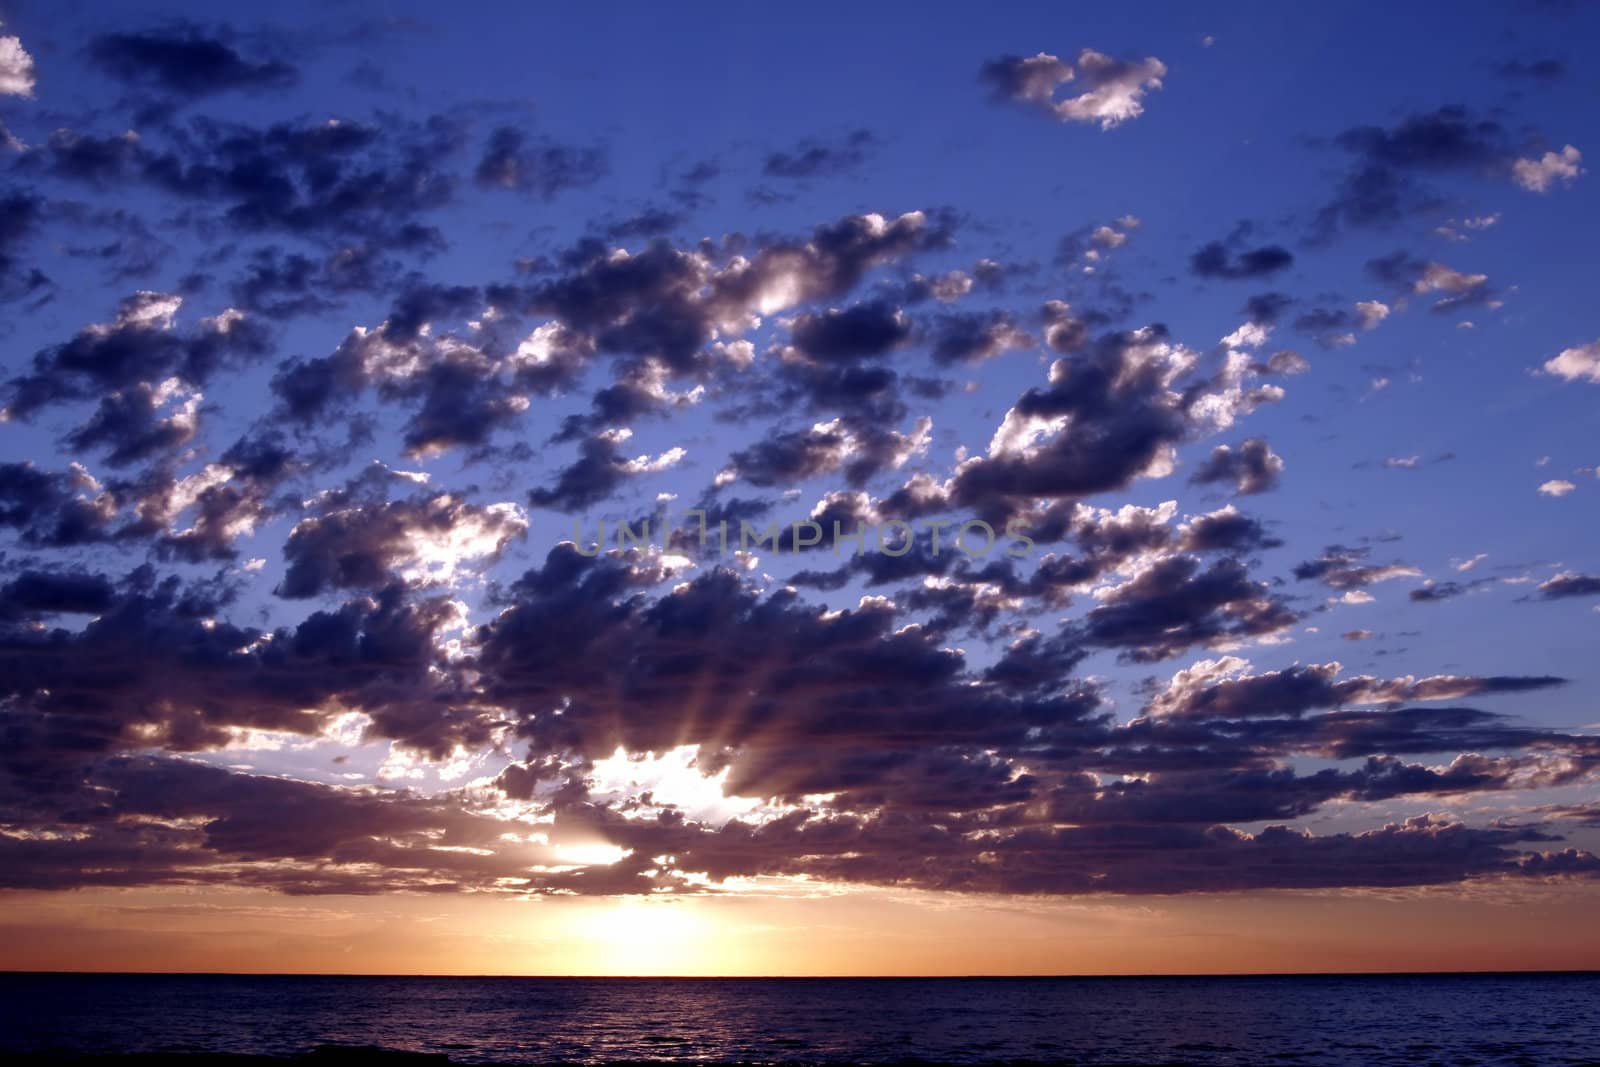 Pacific Sunrise With Dark Clouds, Sydney, Australia